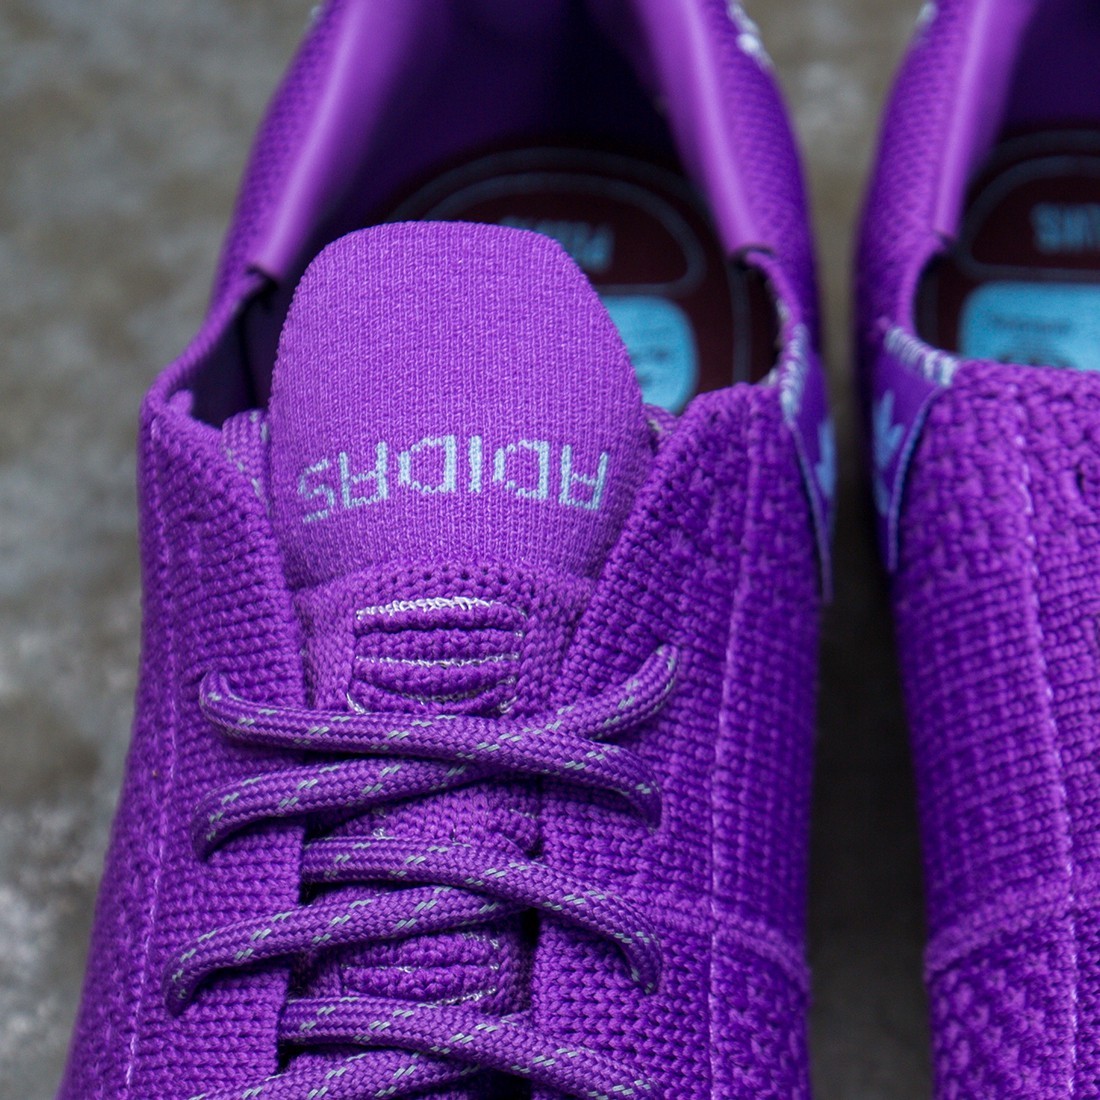 adidas originals superstar primeknit men purple